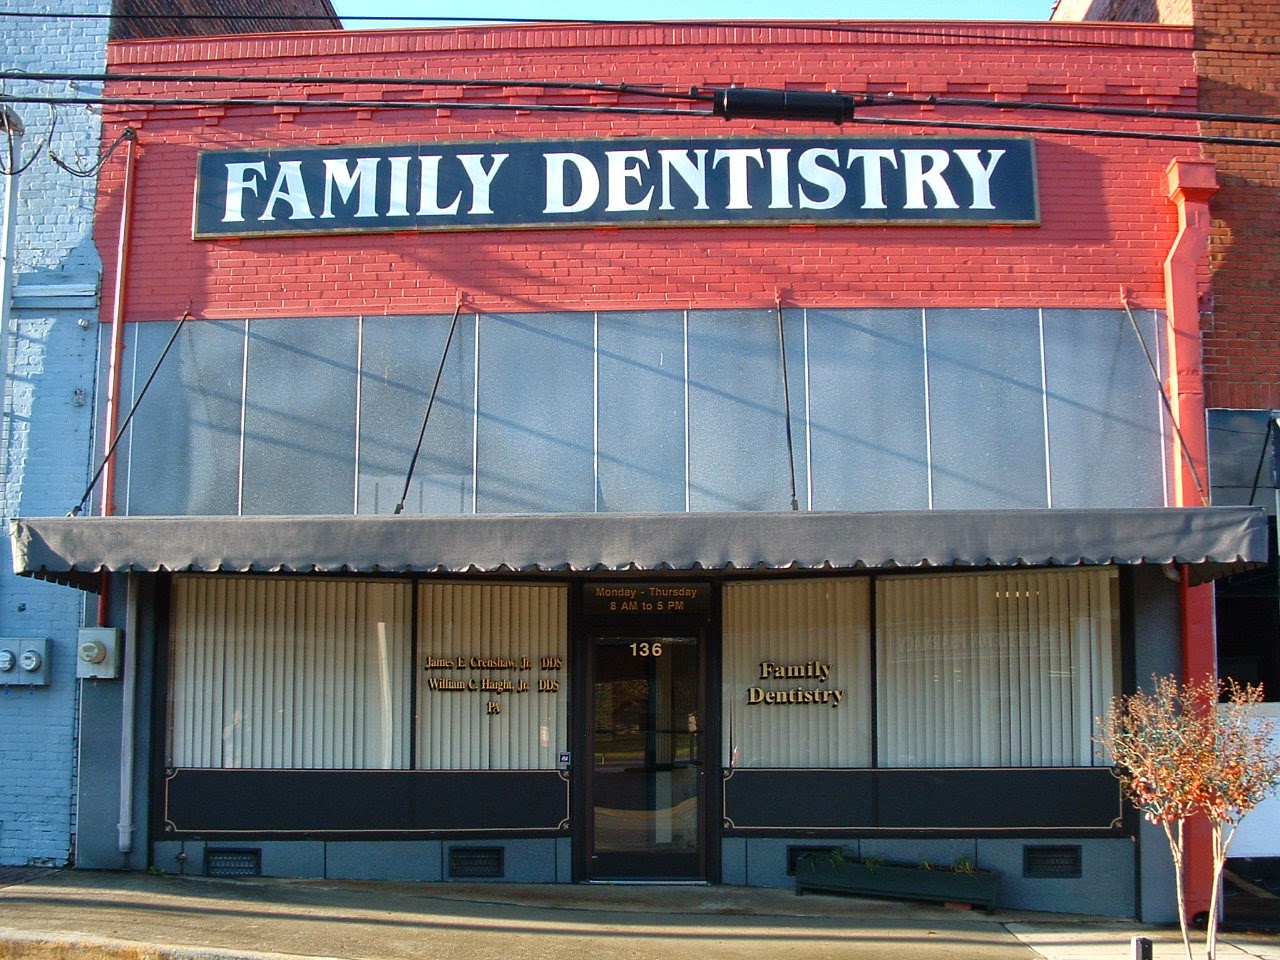 Crenshaw & Haight Family Dentistry: James E Crenshaw Jr DDS & William C Haight Jr DDS 136 E South Main St, Littleton North Carolina 27850